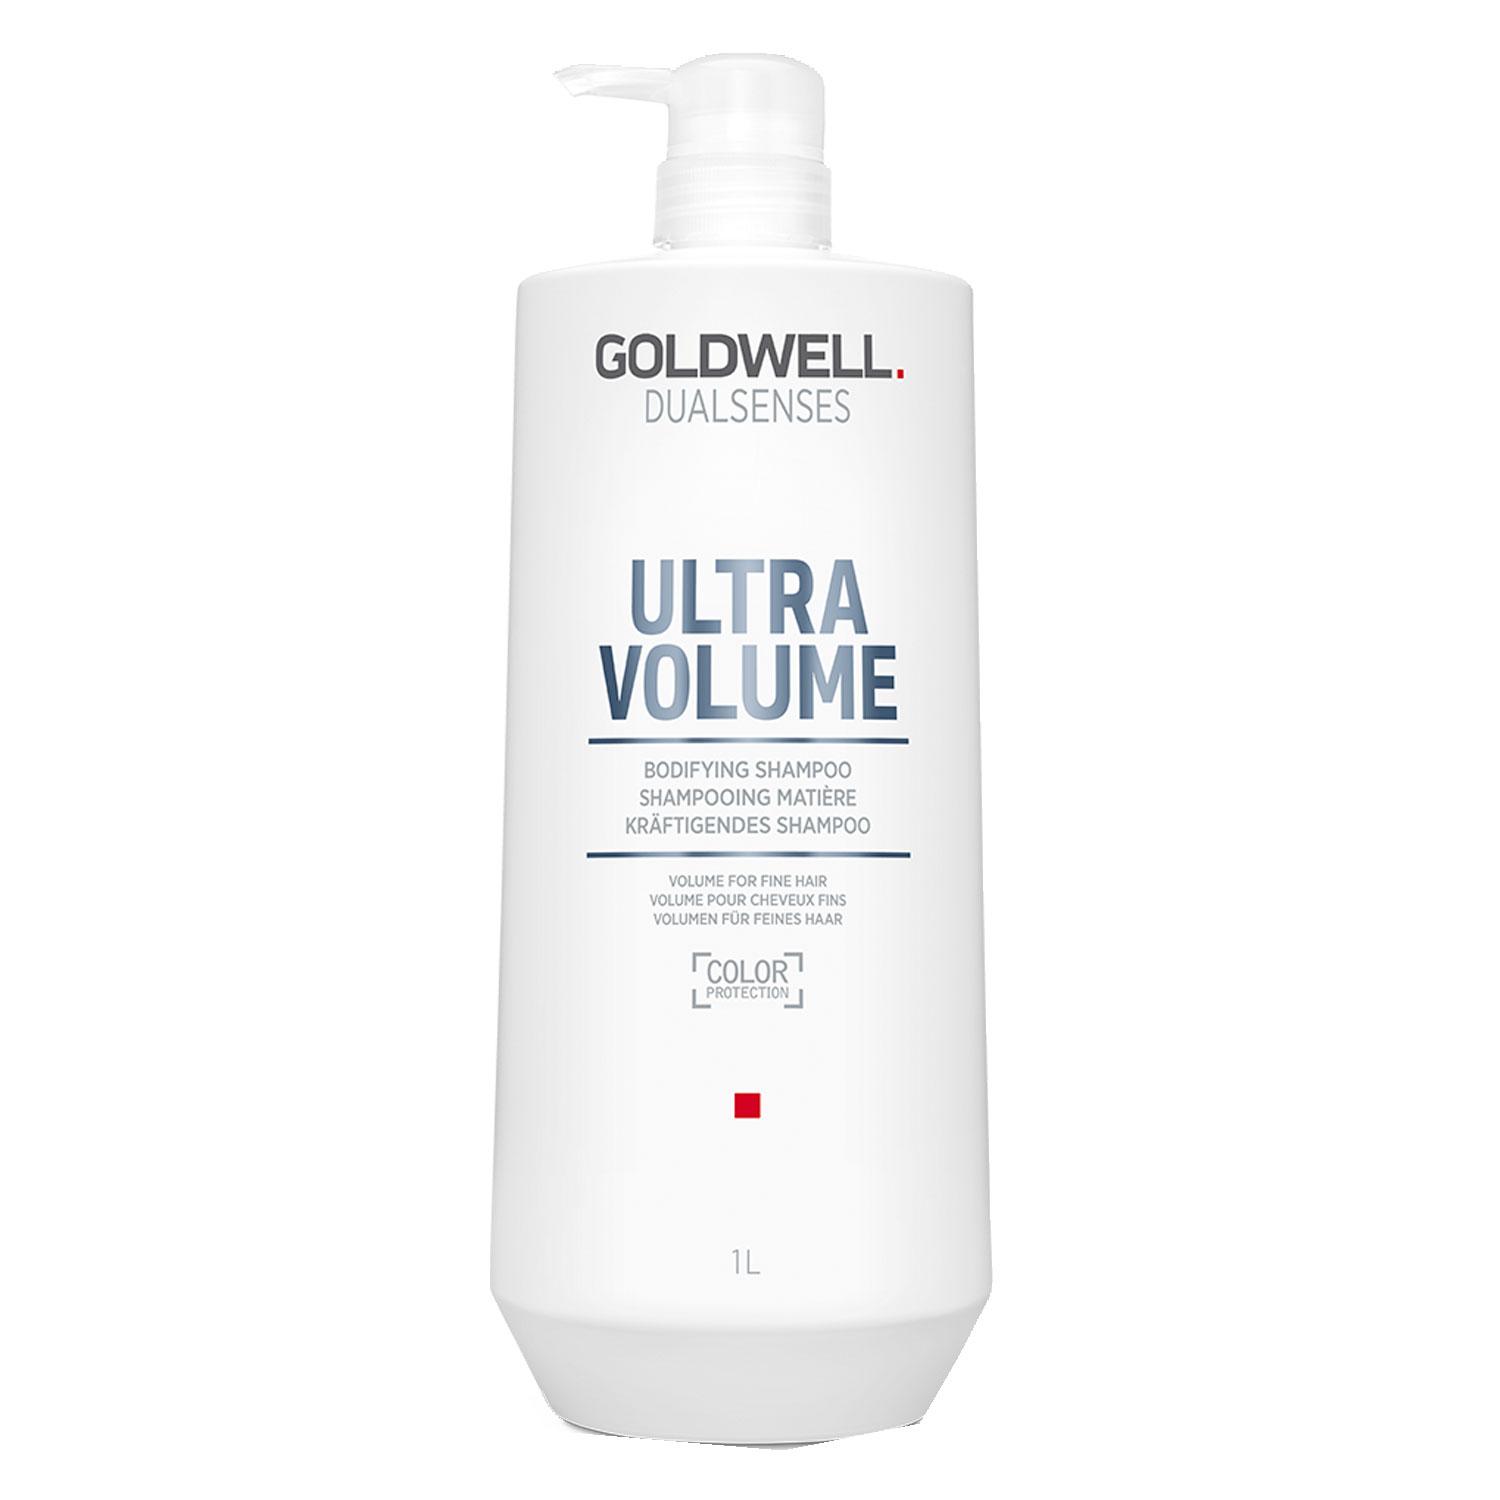 Dualsenses Ultra Volume - Bodifying Shampoo